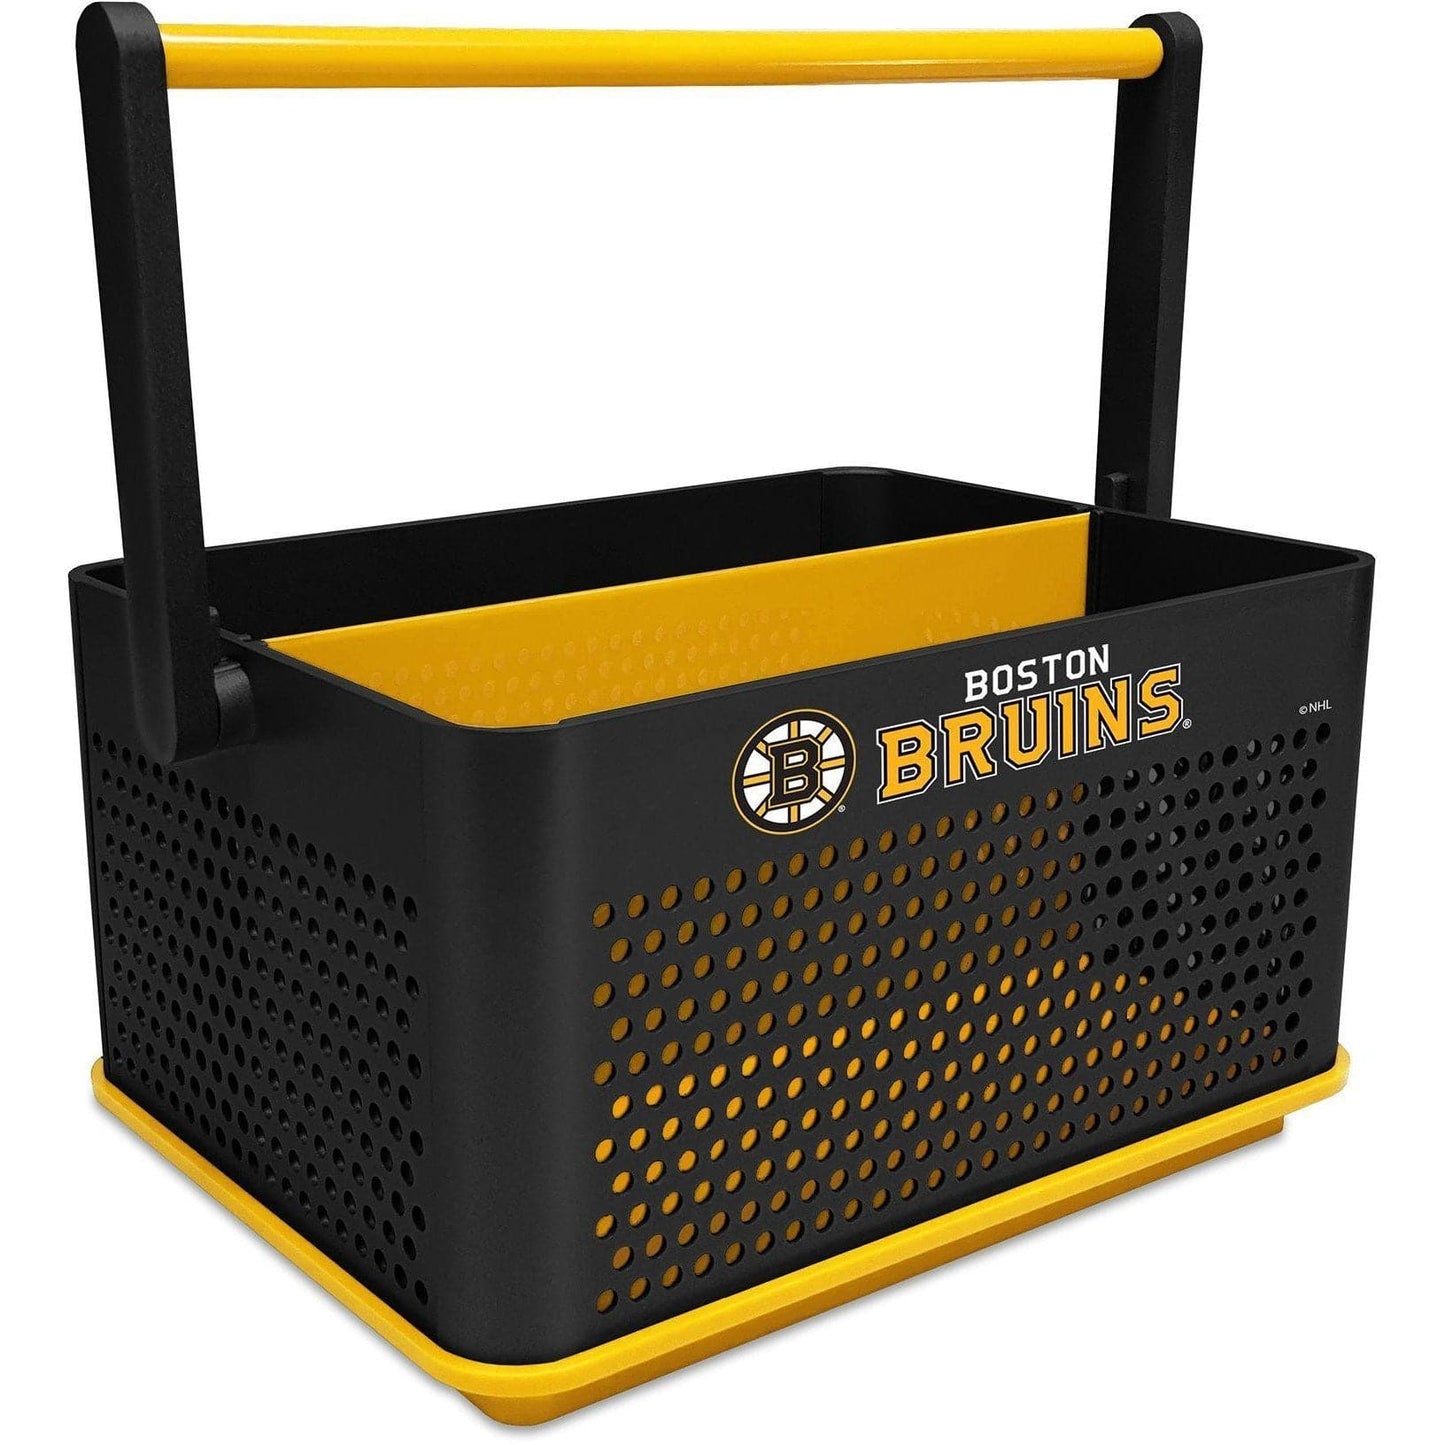 Boston Bruins: Tailgate Caddy - The Fan-Brand